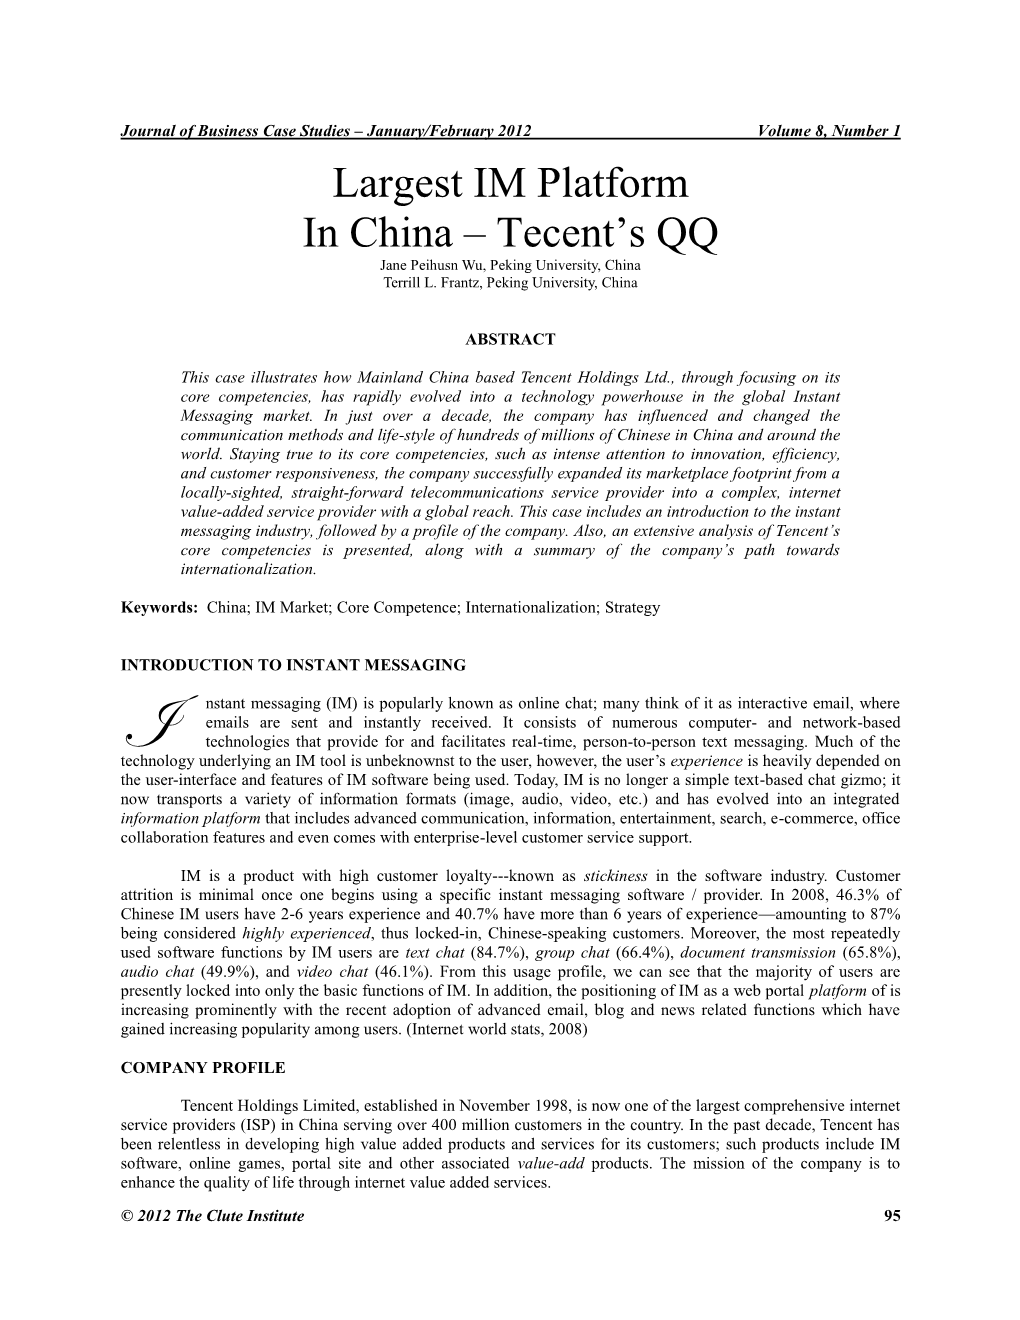 Largest IM Platform in China – Tecent's QQ